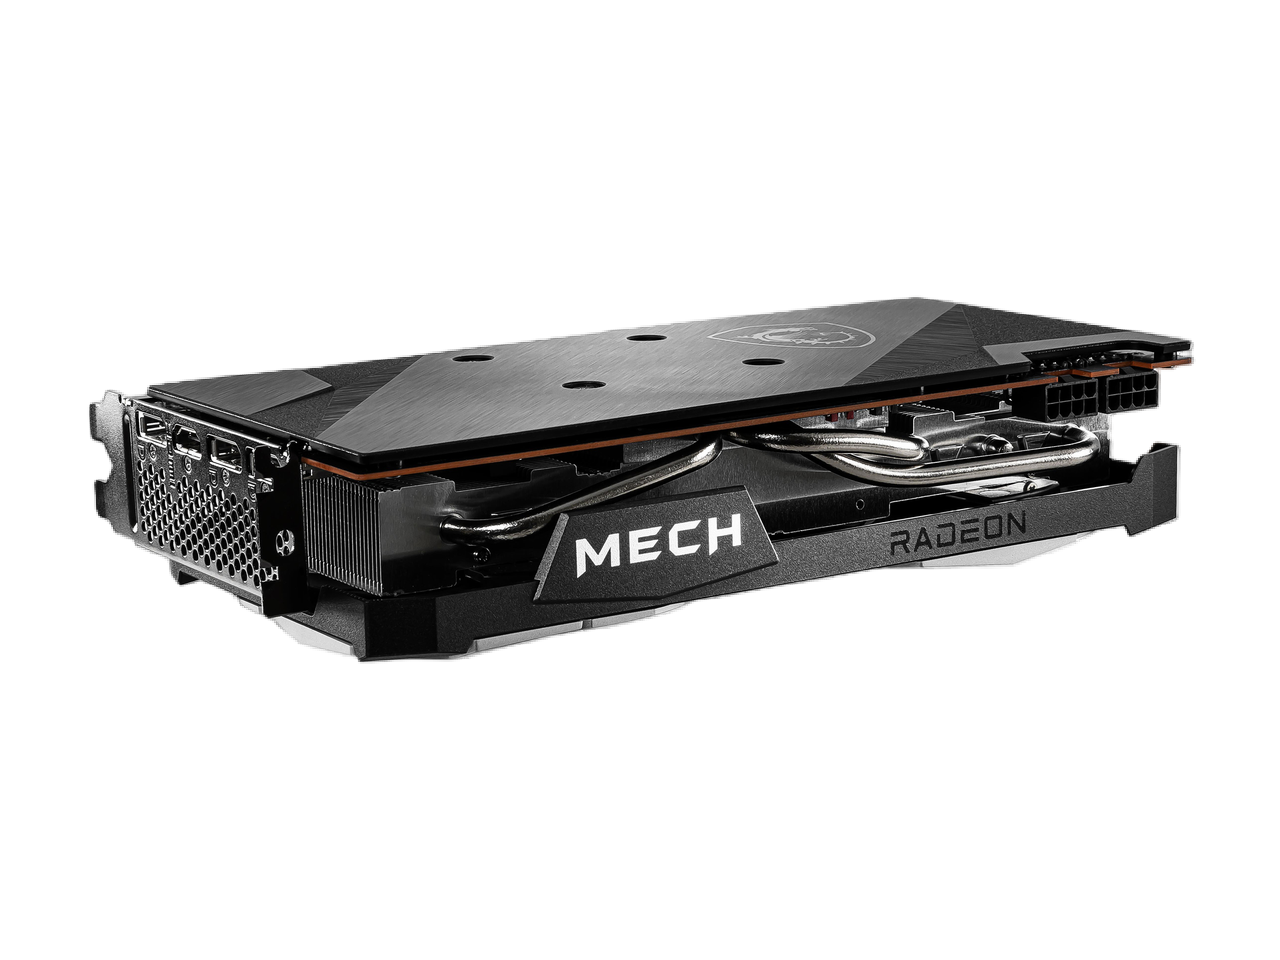 MSI Mech Radeon RX 6700 XT 12GB GDDR6 PCI Express 4.0 Video Card RX 6700 XT MECH 2X 12G OC